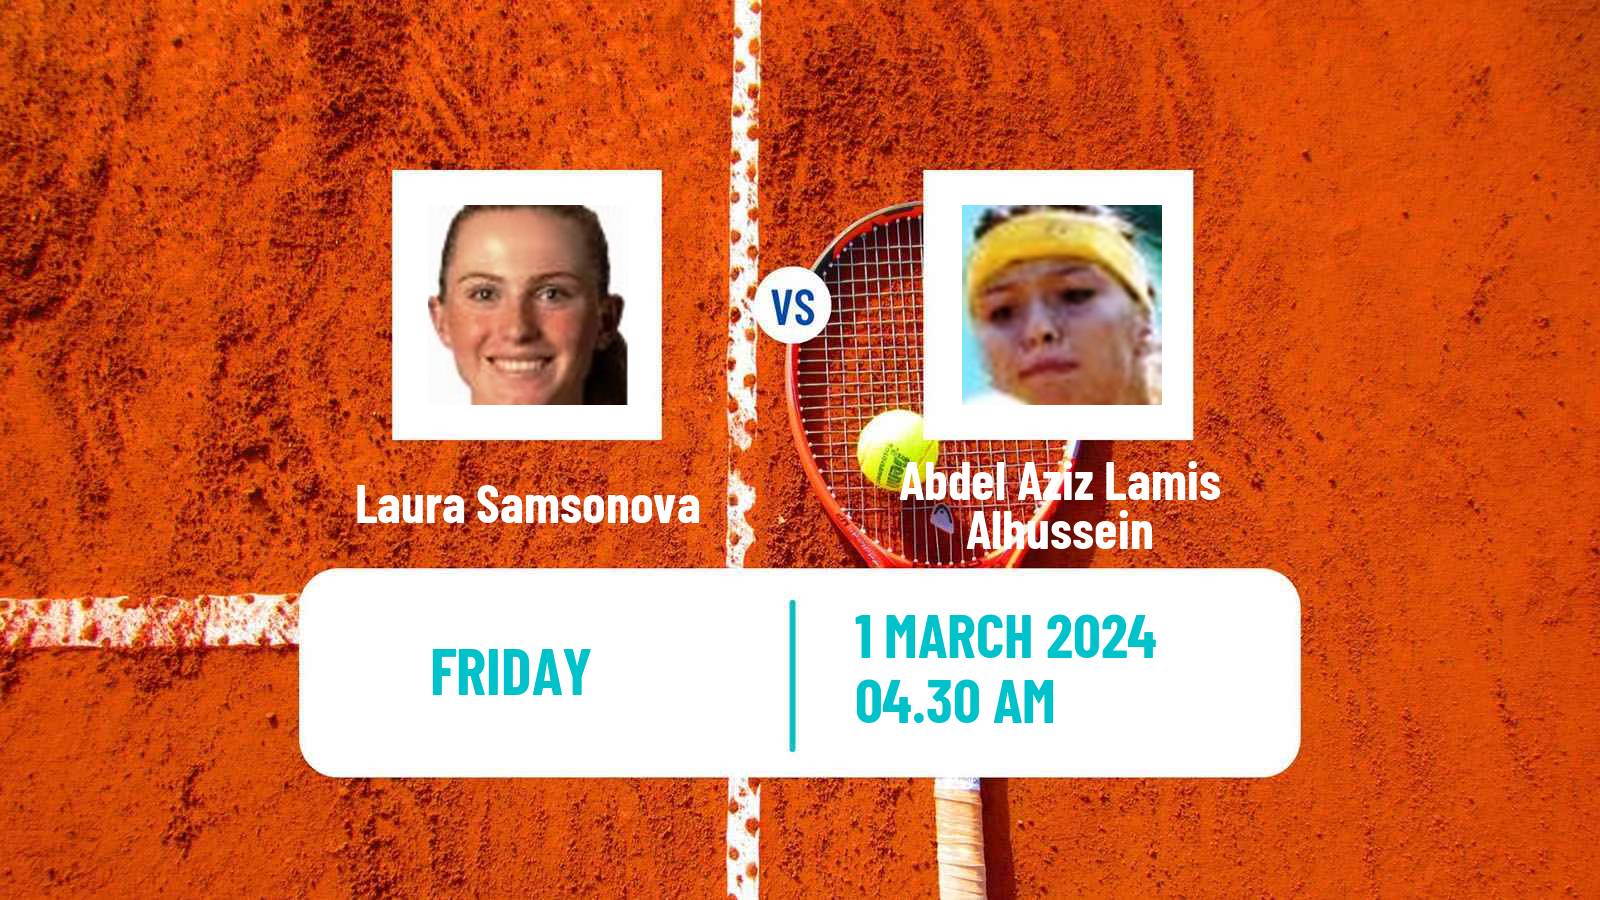 Tennis ITF W15 Sharm Elsheikh 4 Women Laura Samsonova - Abdel Aziz Lamis Alhussein